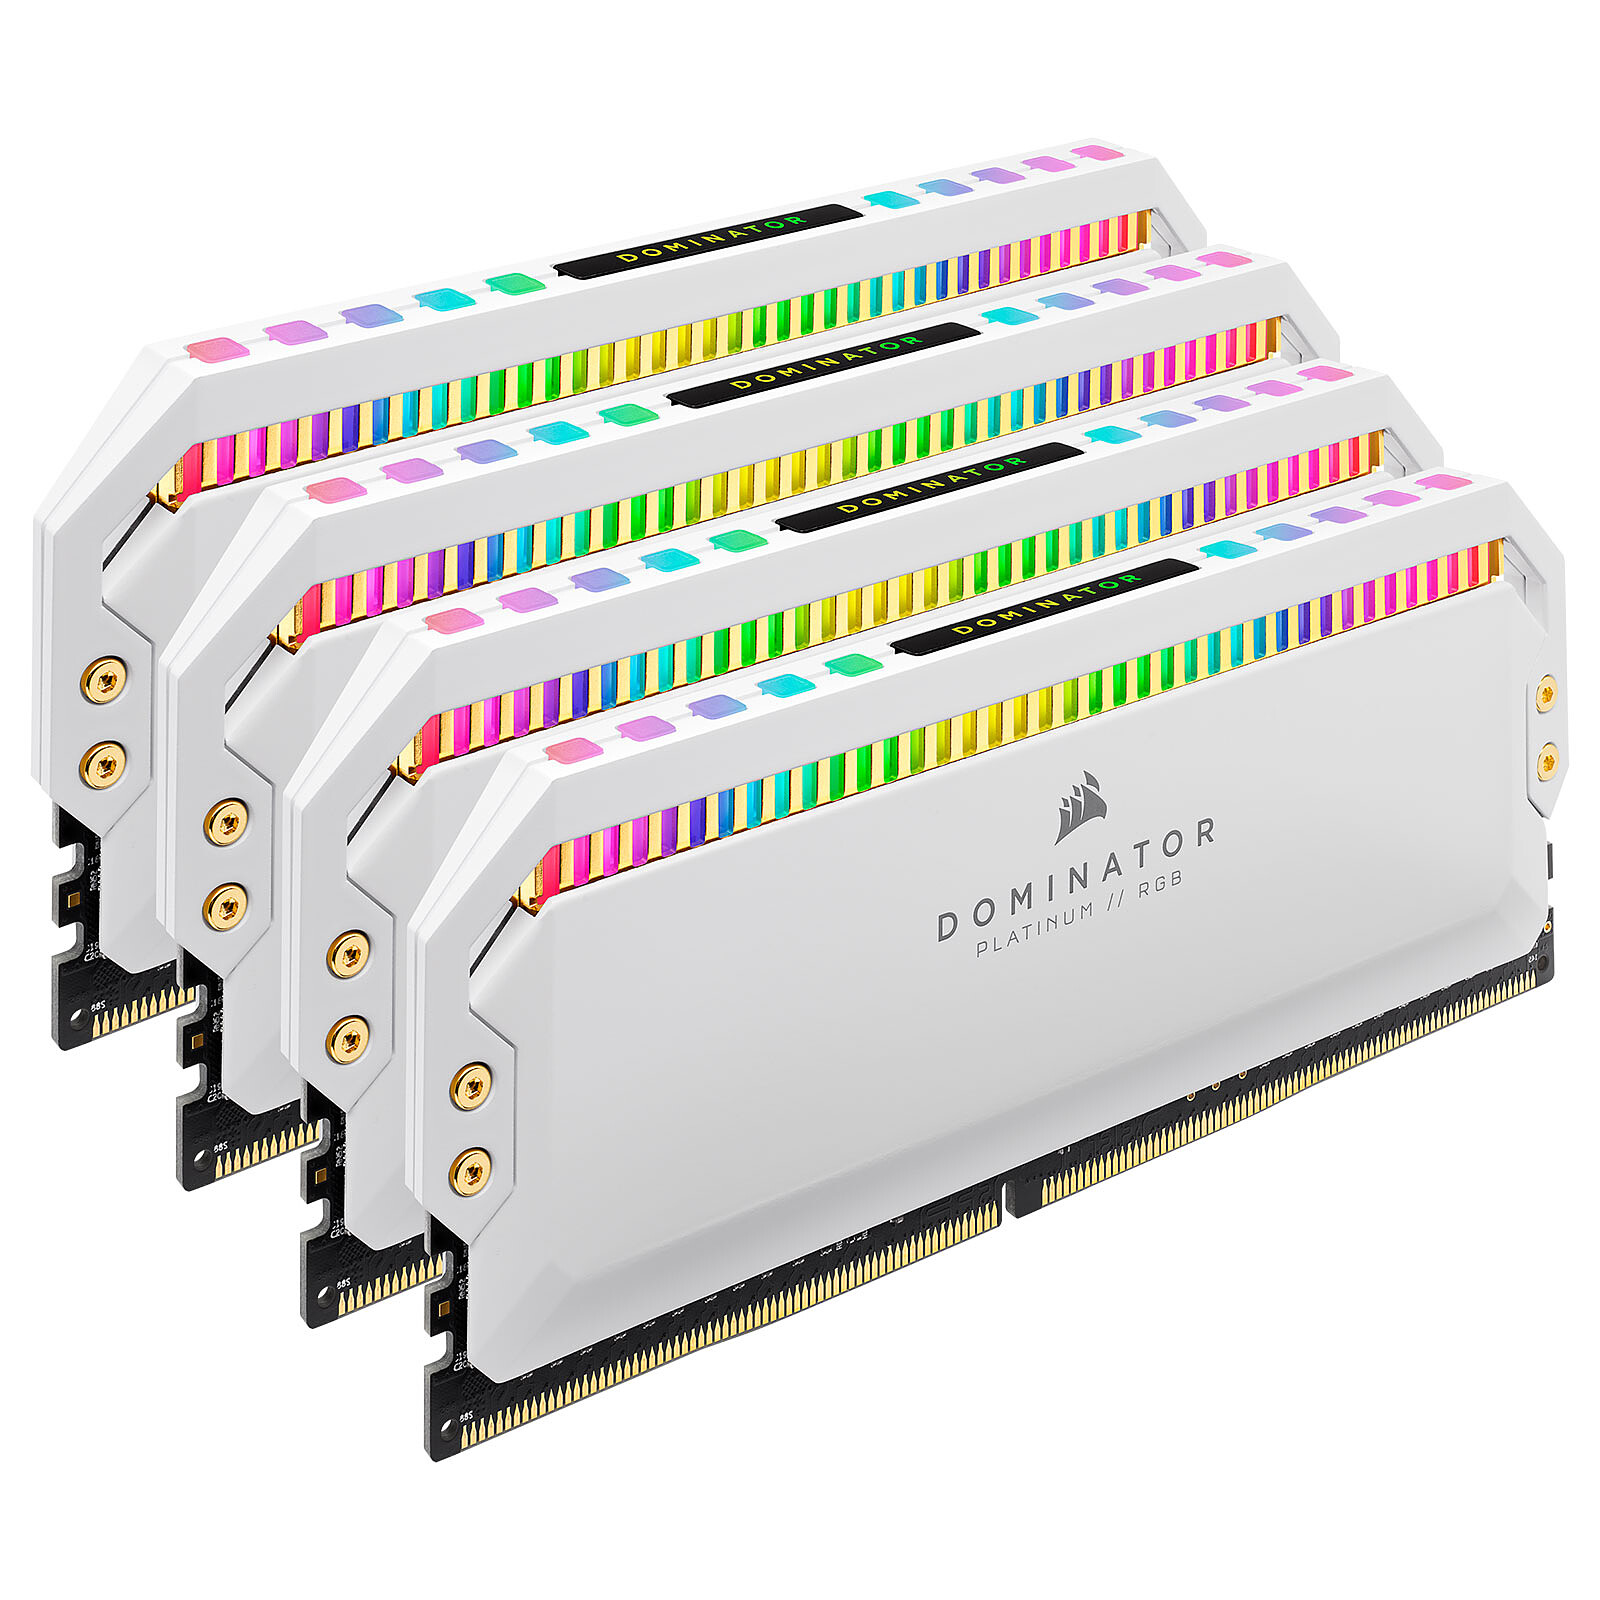 Corsair Dominator Platinum RGB 32 Go (4 x 8 Go) DDR4 3600 MHz CL18